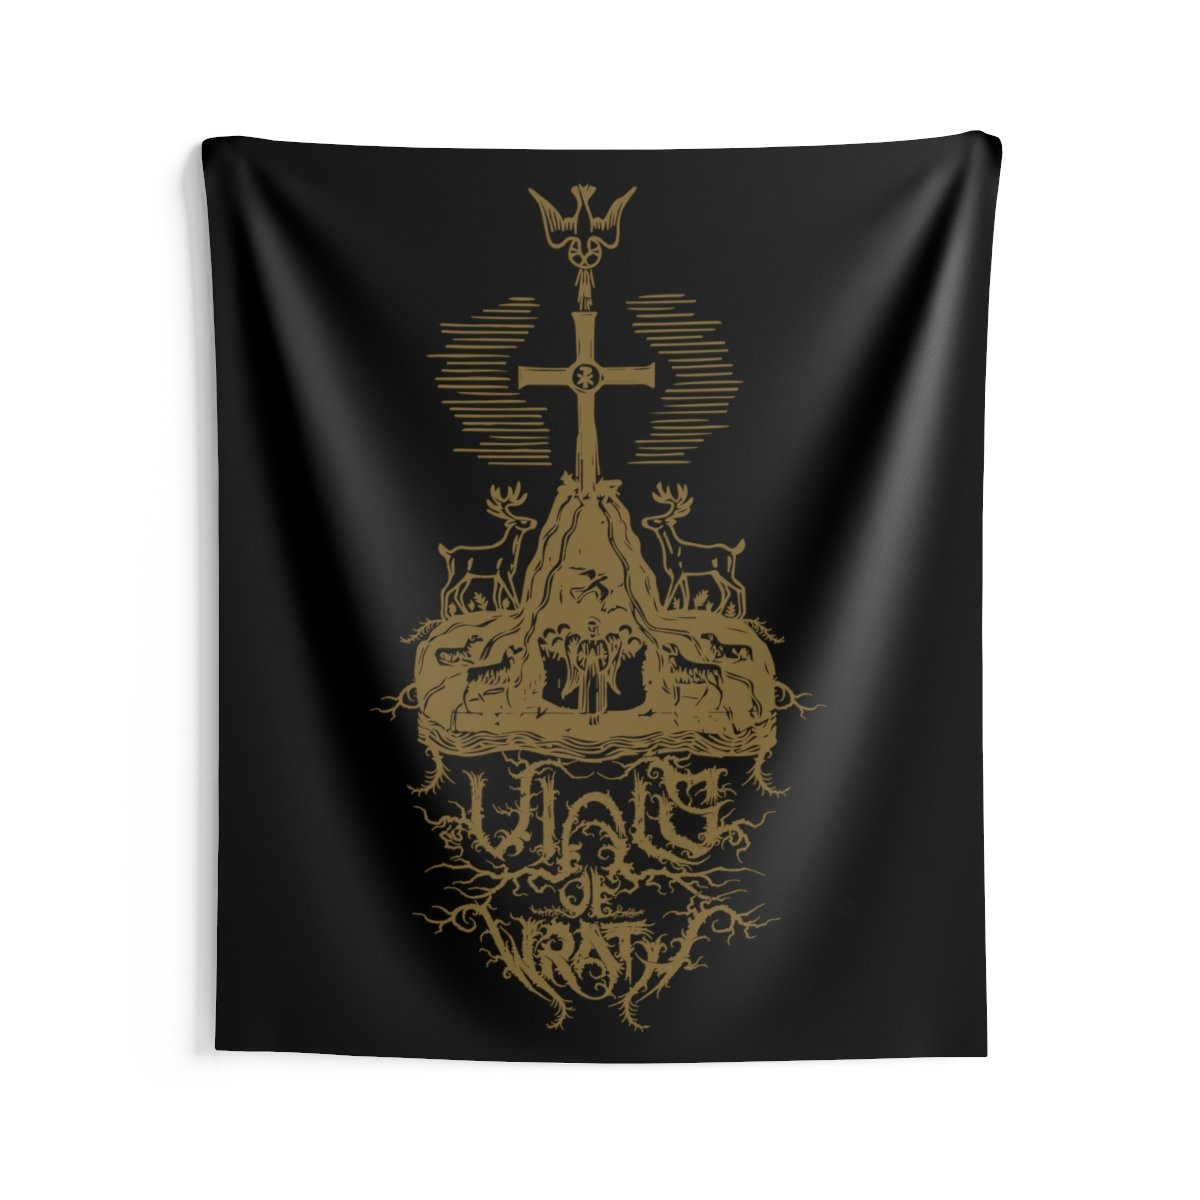 Vials of Wrath – Divinity Indoor Wall Tapestries